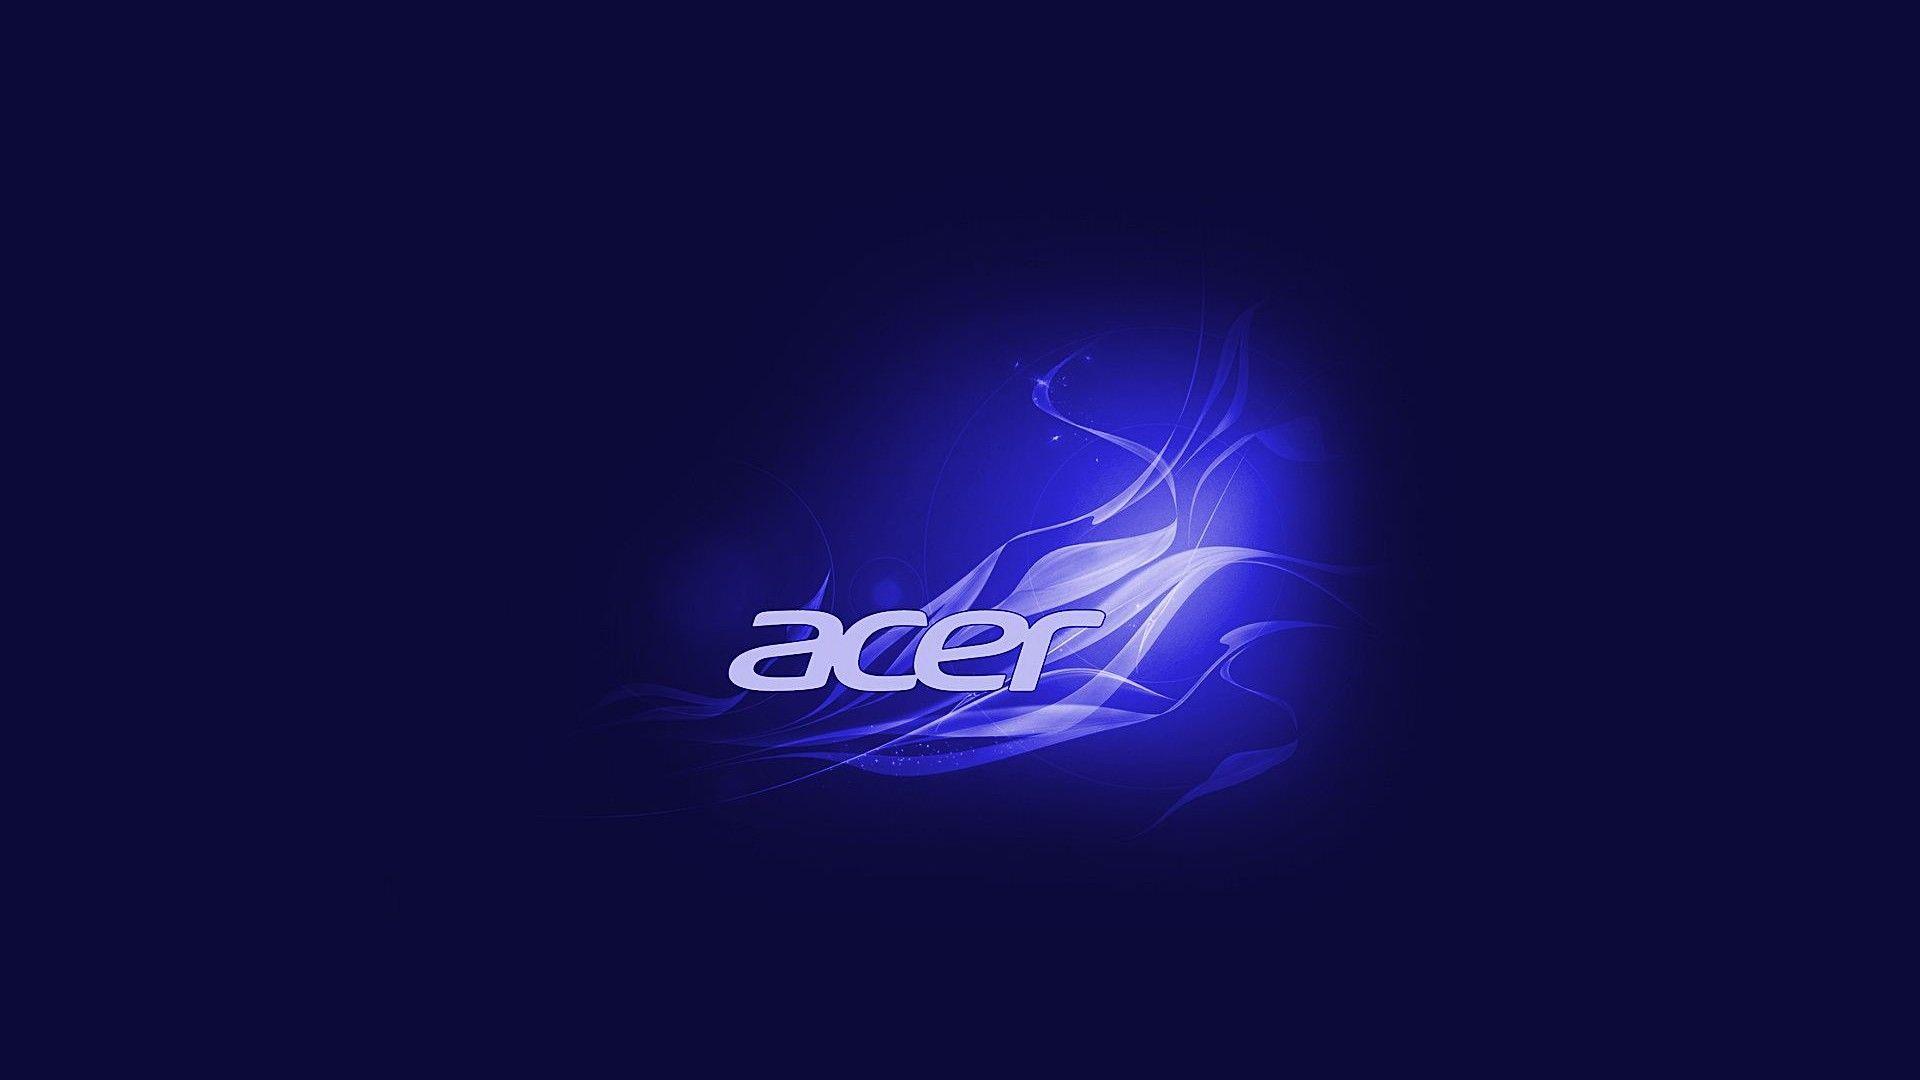 Wallpaper.wiki Acer Blue Logo Wallpaper 1920x1080 PIC WPC005178